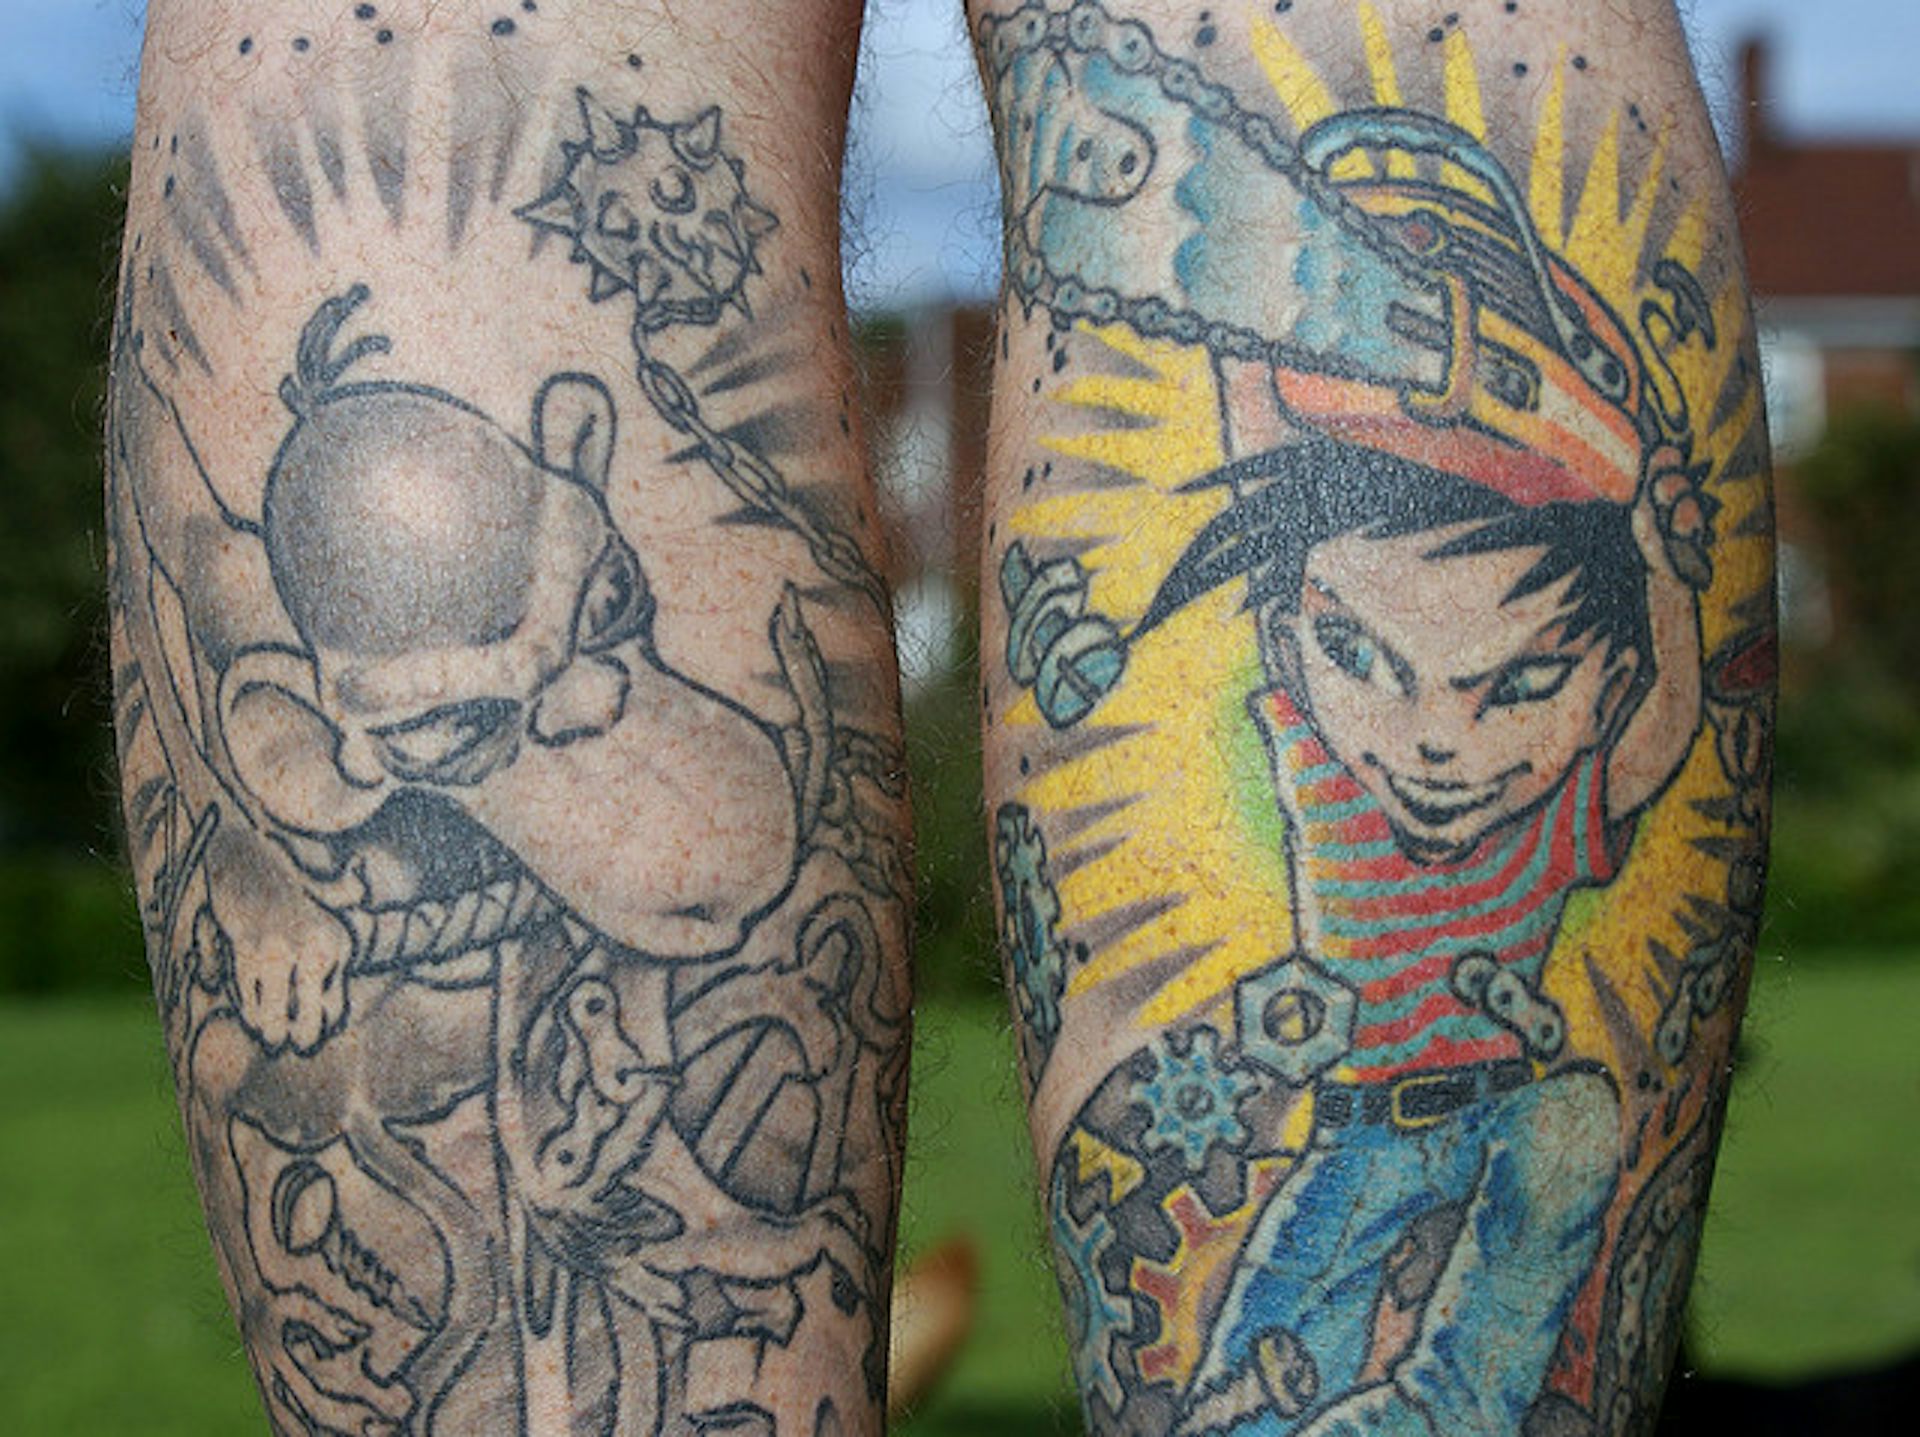 Nostalgic 90s Tattoos  Luis Bonilla Tattoo Ink Set from Radiant Colo   magnumtattoosupplies